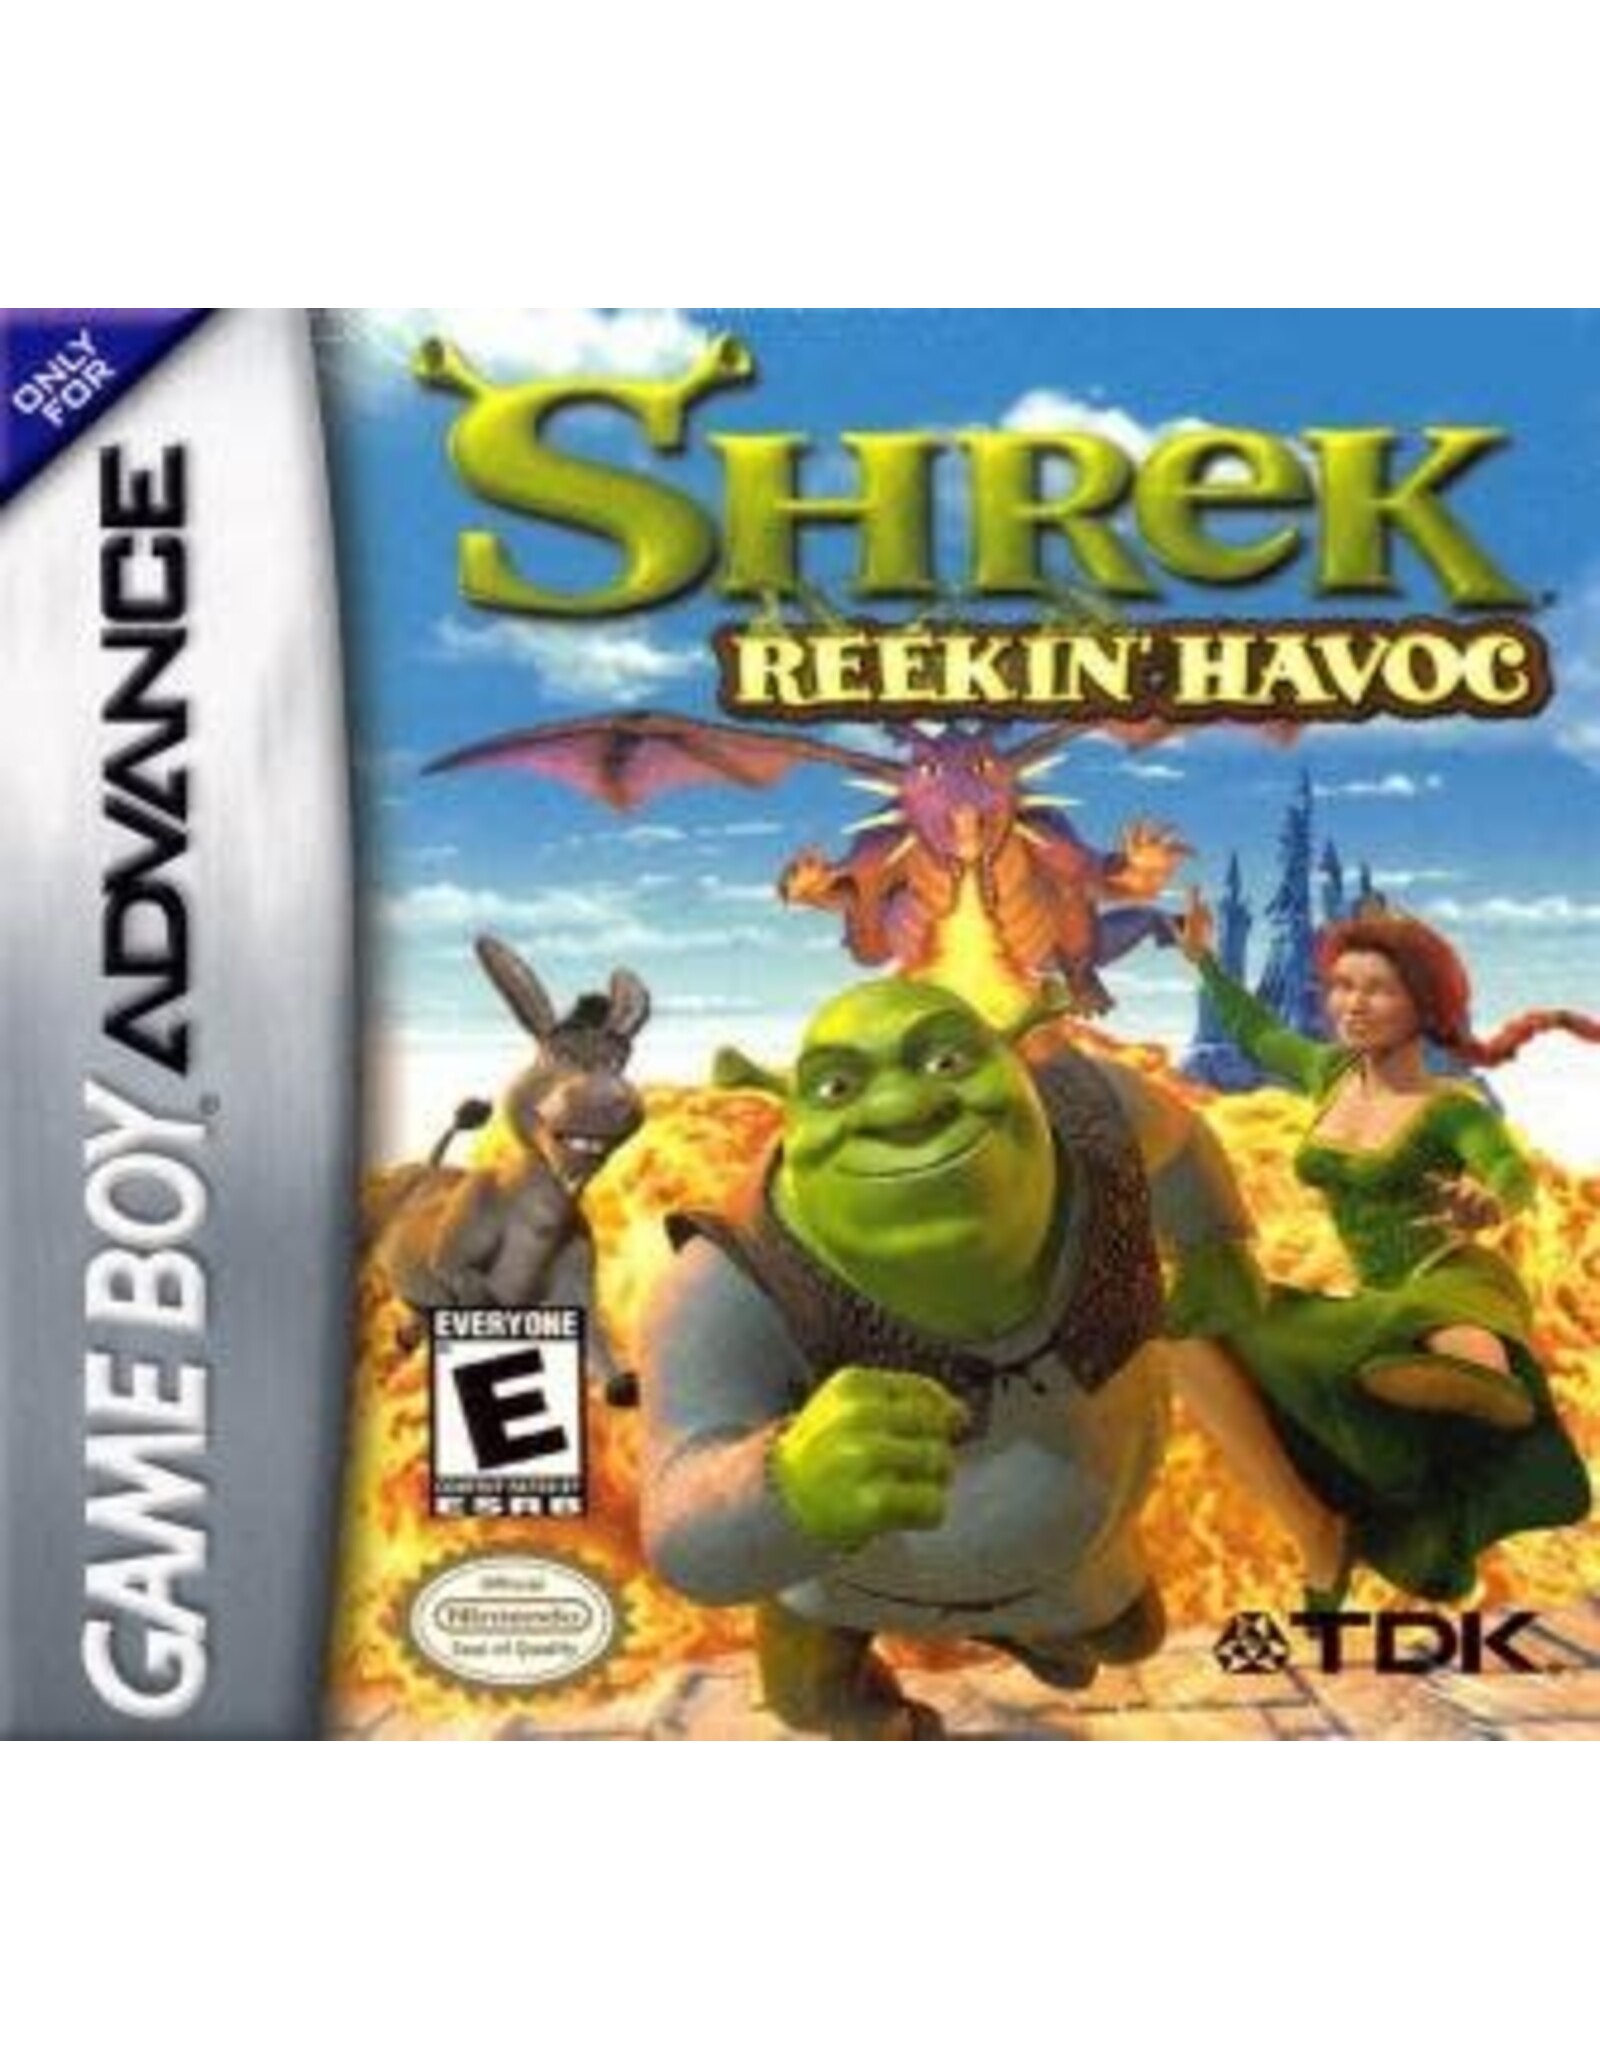 Game Boy Advance Shrek Reekin' Havoc (Used, Cart Only)